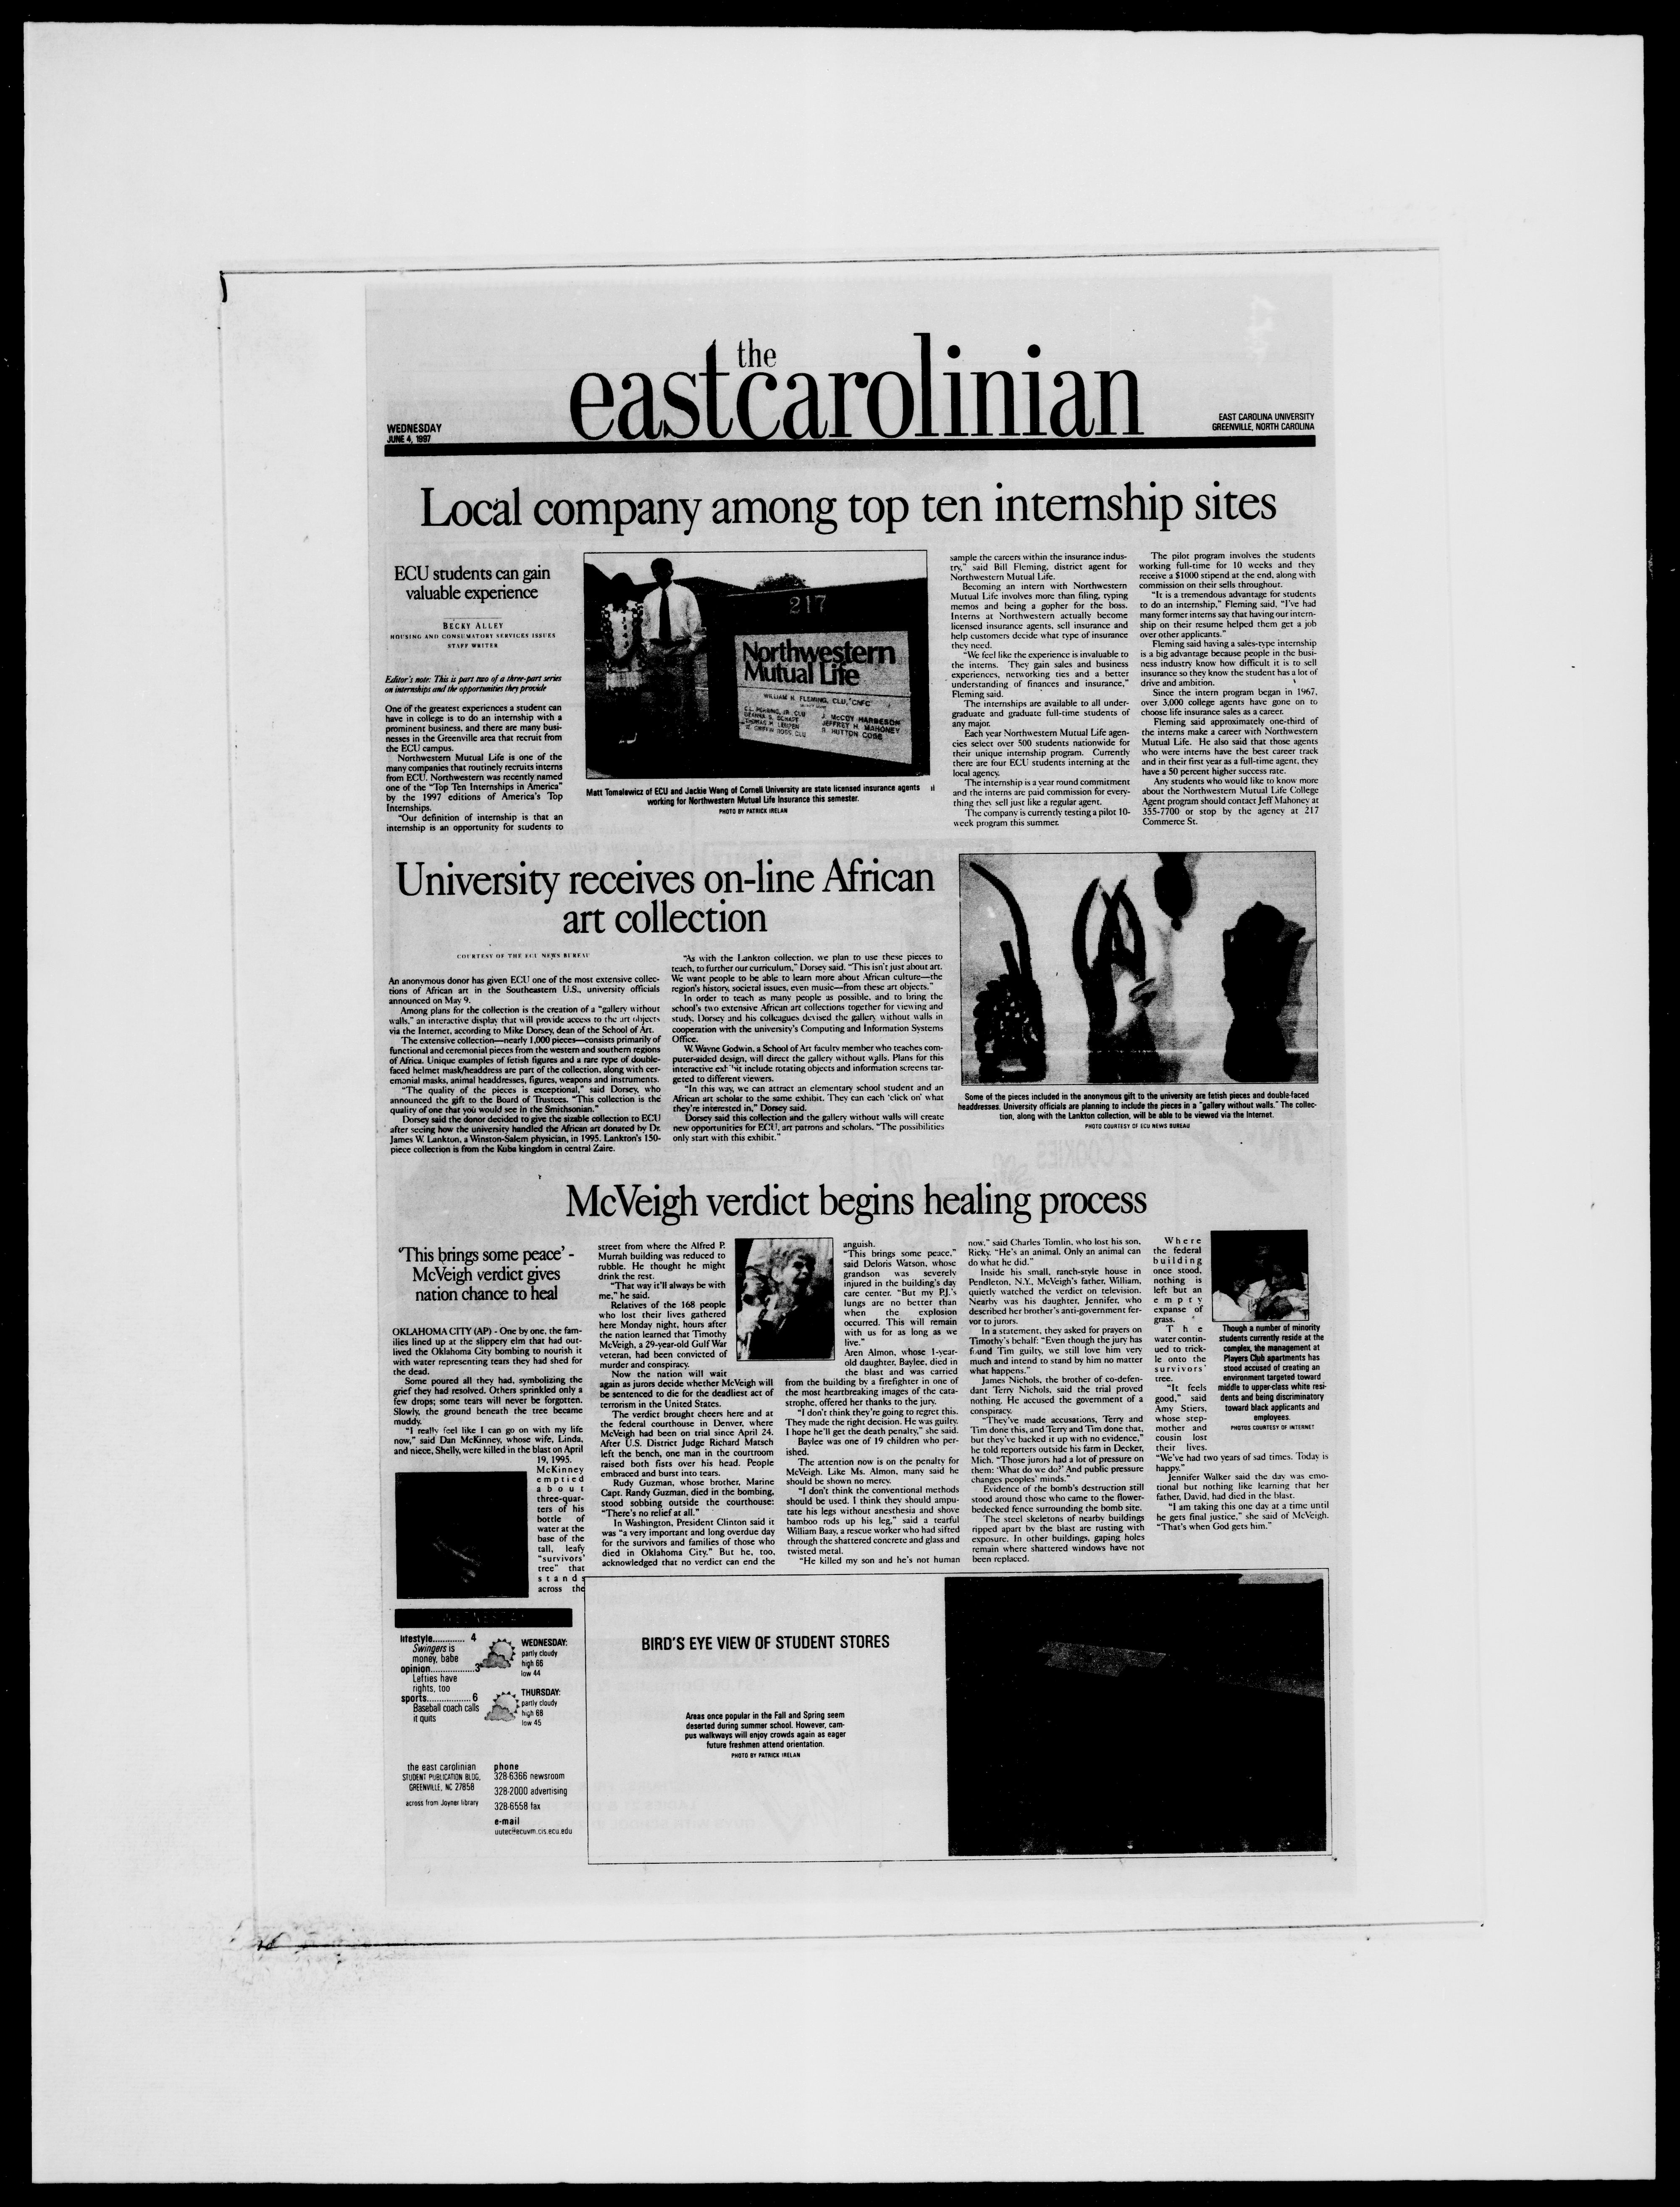 The East Carolinian, June 4, 1997 pic